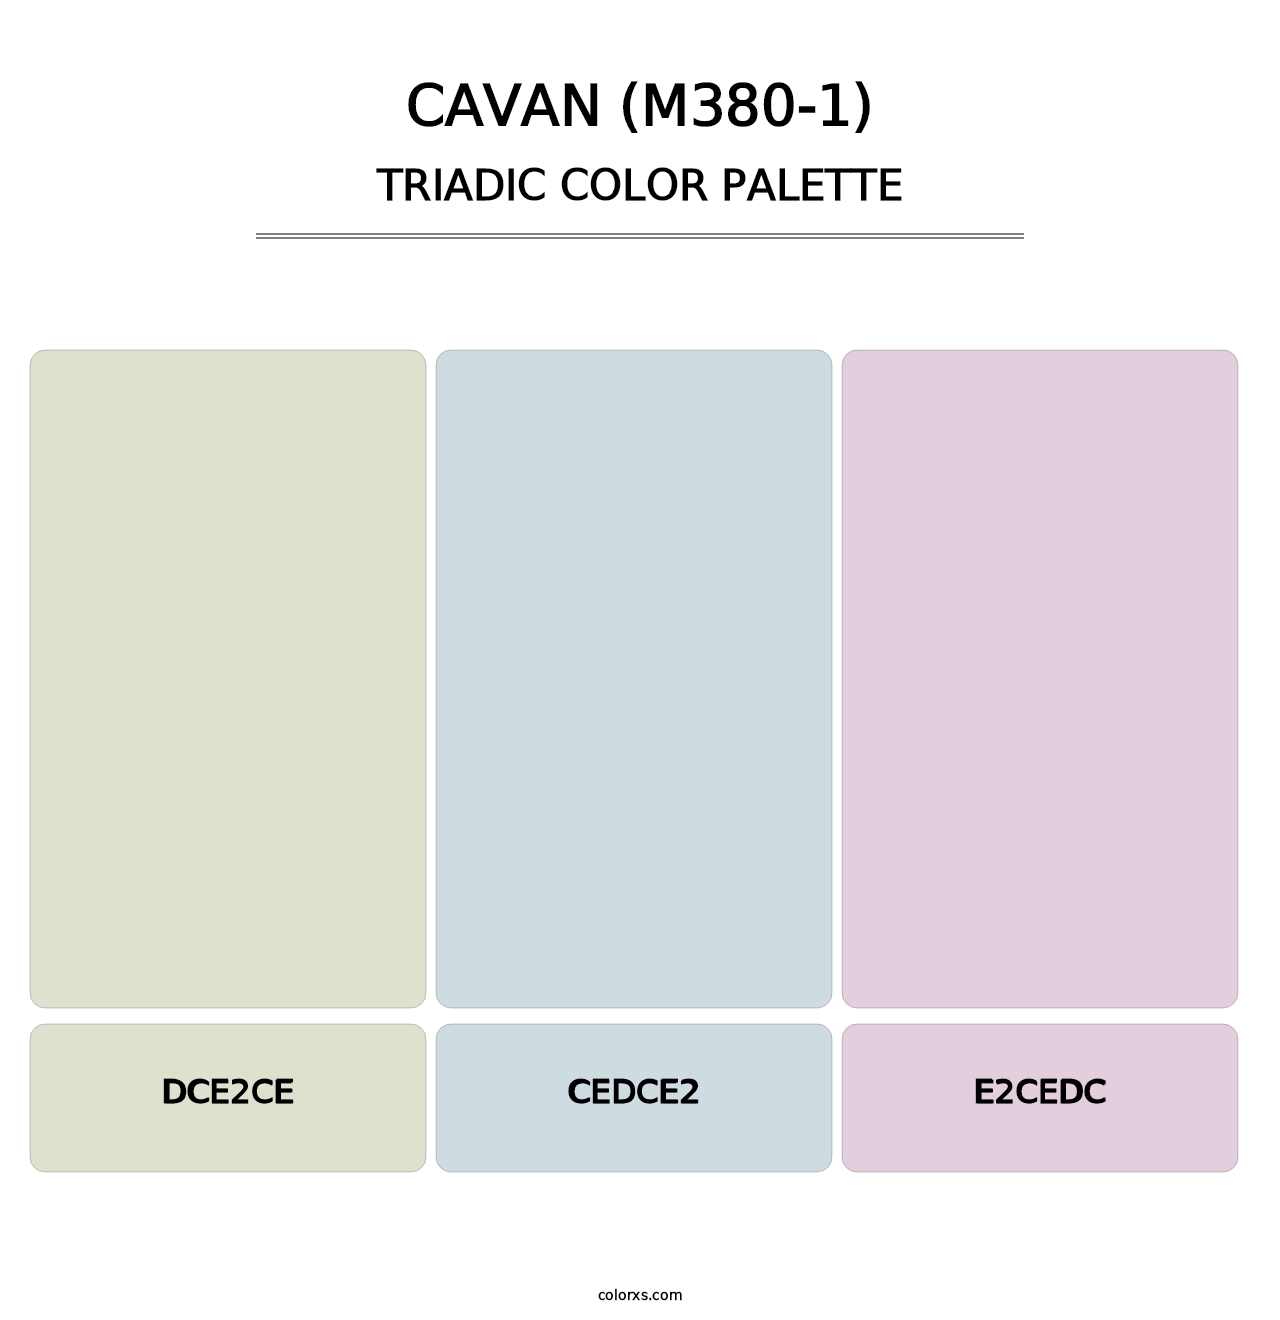 Cavan (M380-1) - Triadic Color Palette